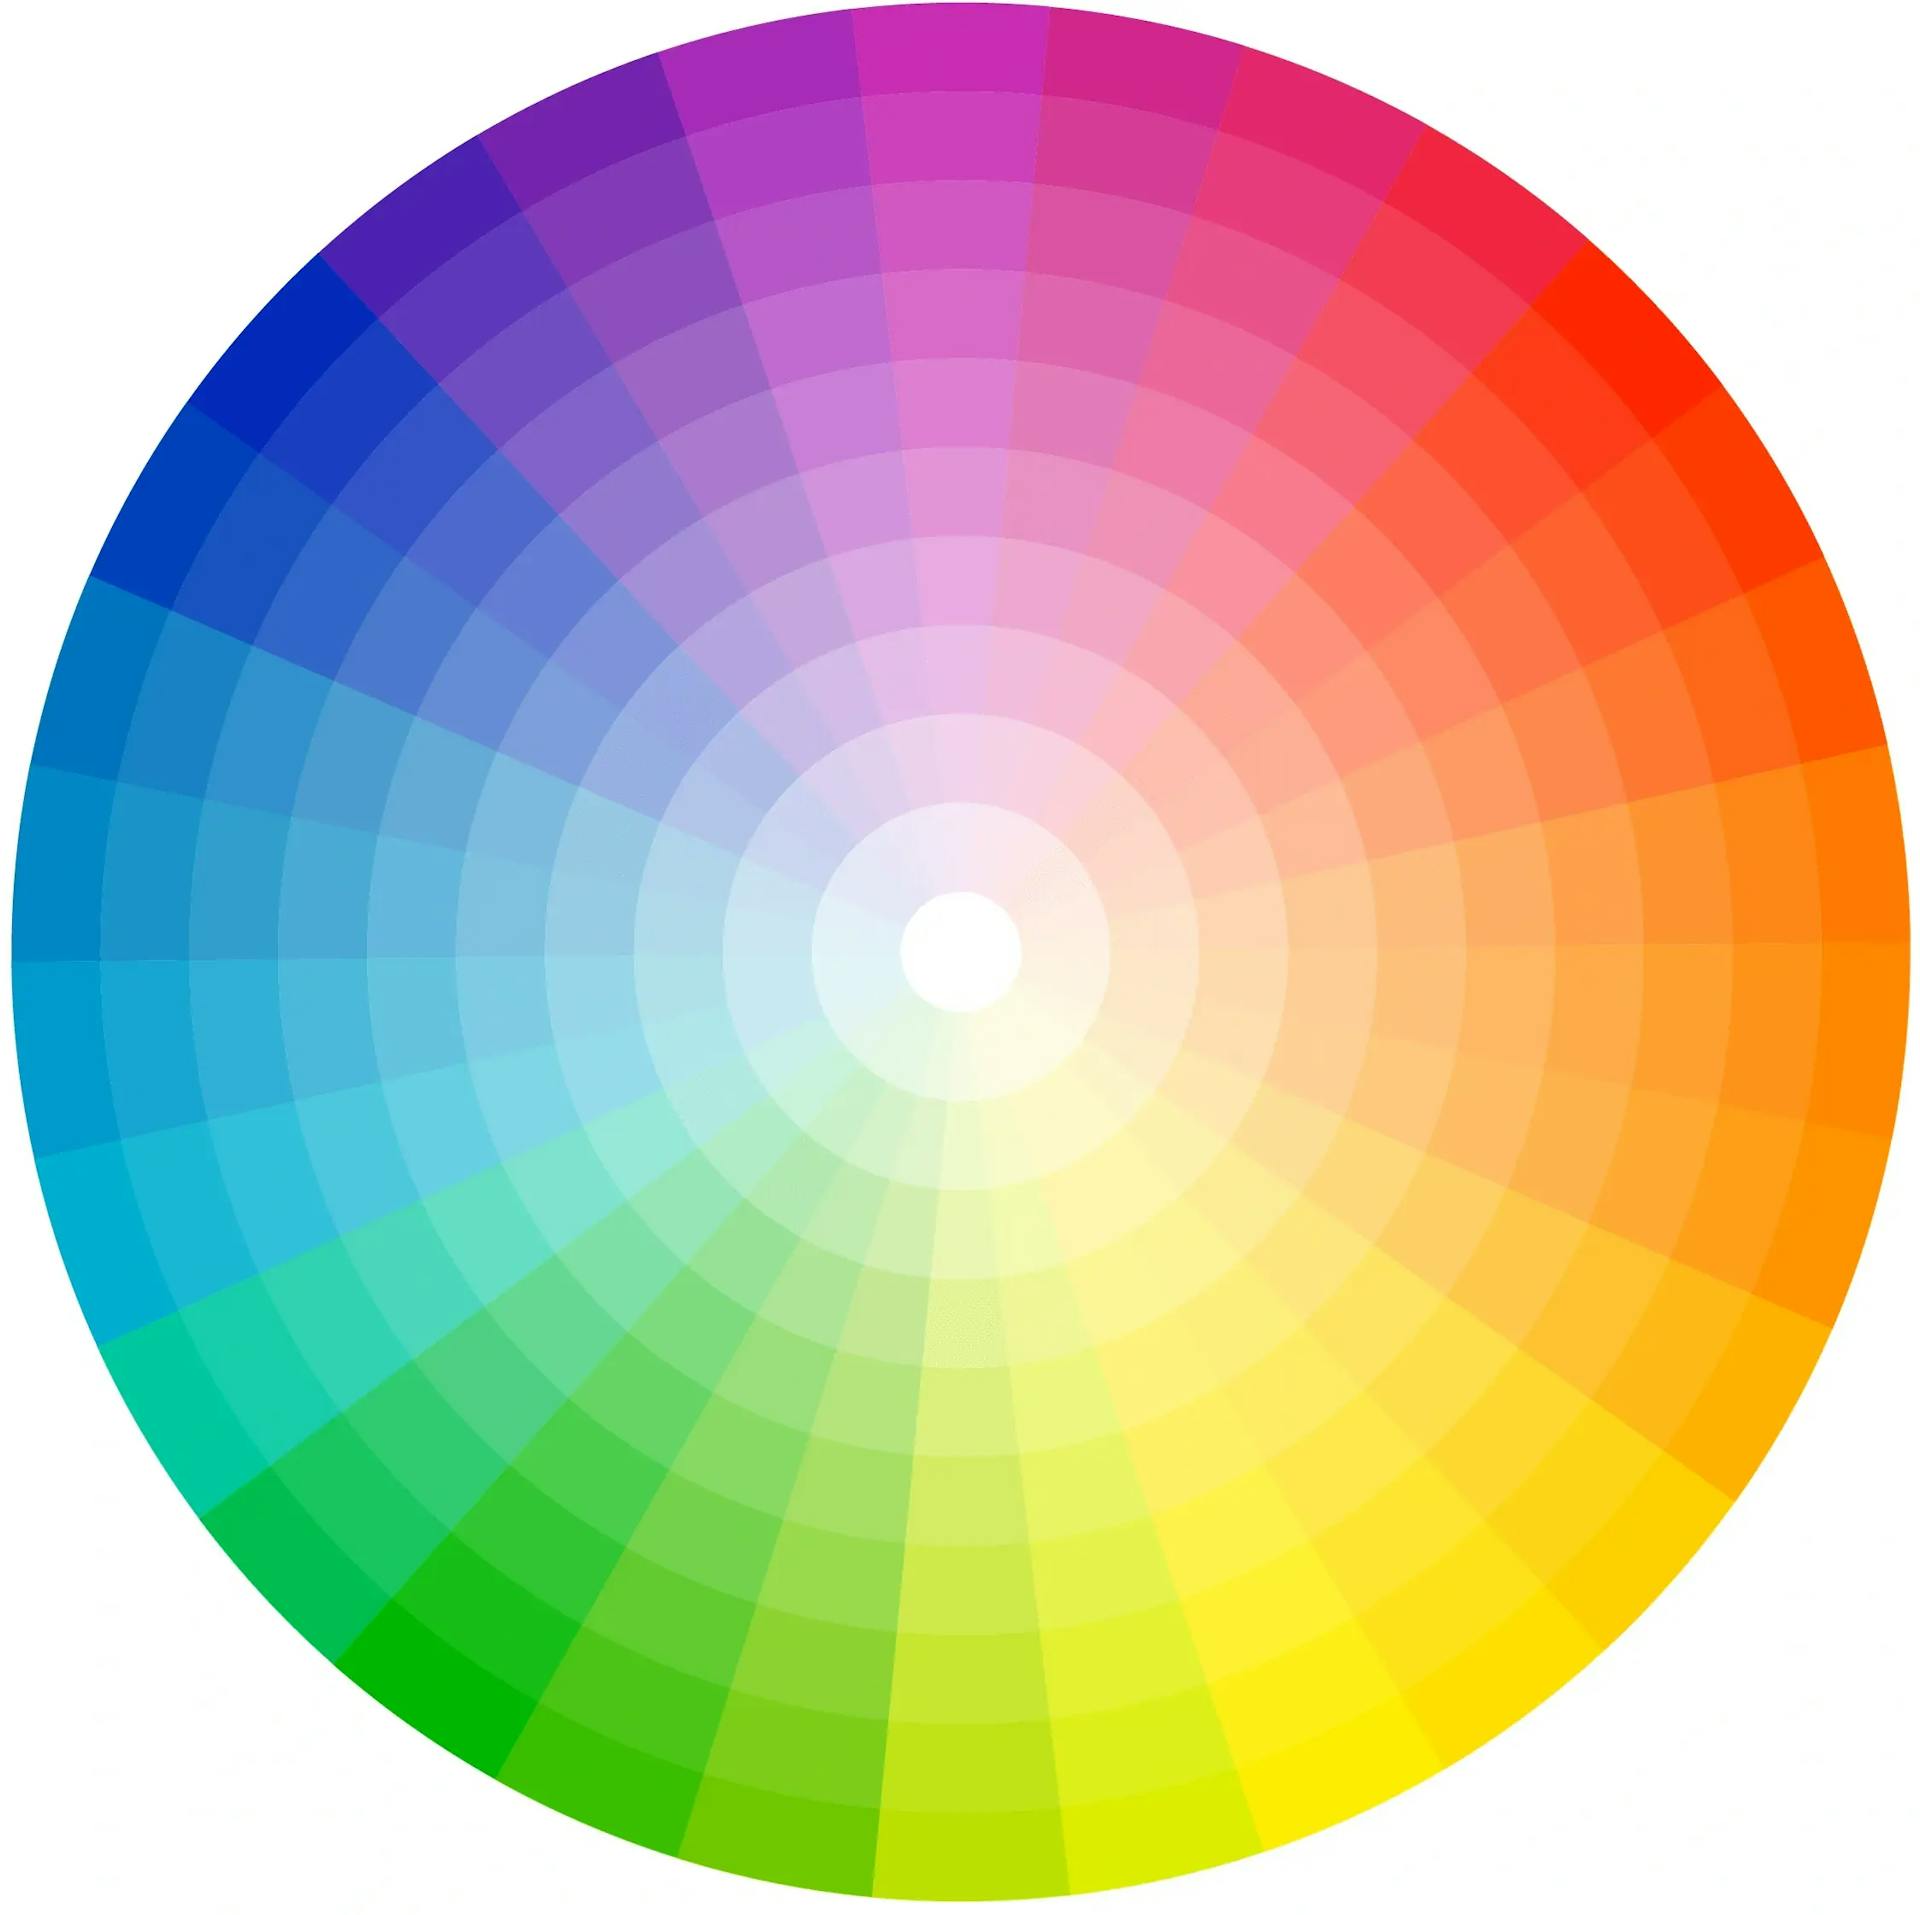 Ein moderner, simpler Farbkreis